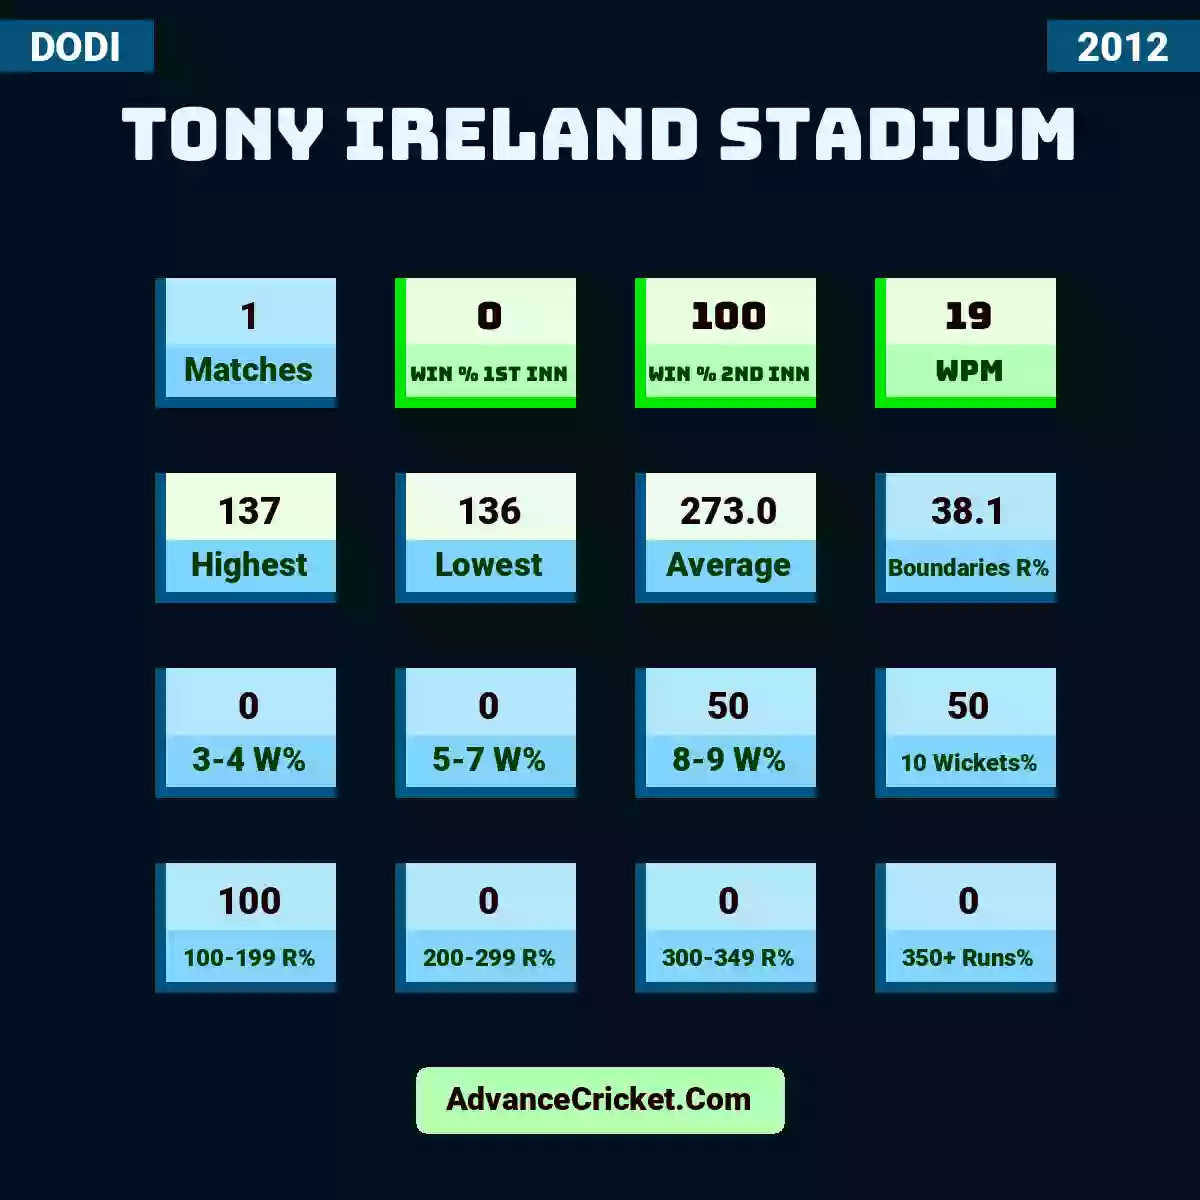 Image showing Tony Ireland Stadium with Matches: 1, Win % 1st Inn: 0, Win % 2nd Inn: 100, WPM: 19, Highest: 137, Lowest: 136, Average: 273.0, Boundaries R%: 38.1, 3-4 W%: 0, 5-7 W%: 0, 8-9 W%: 50, 10 Wickets%: 50, 100-199 R%: 100, 200-299 R%: 0, 300-349 R%: 0, 350+ Runs%: 0.